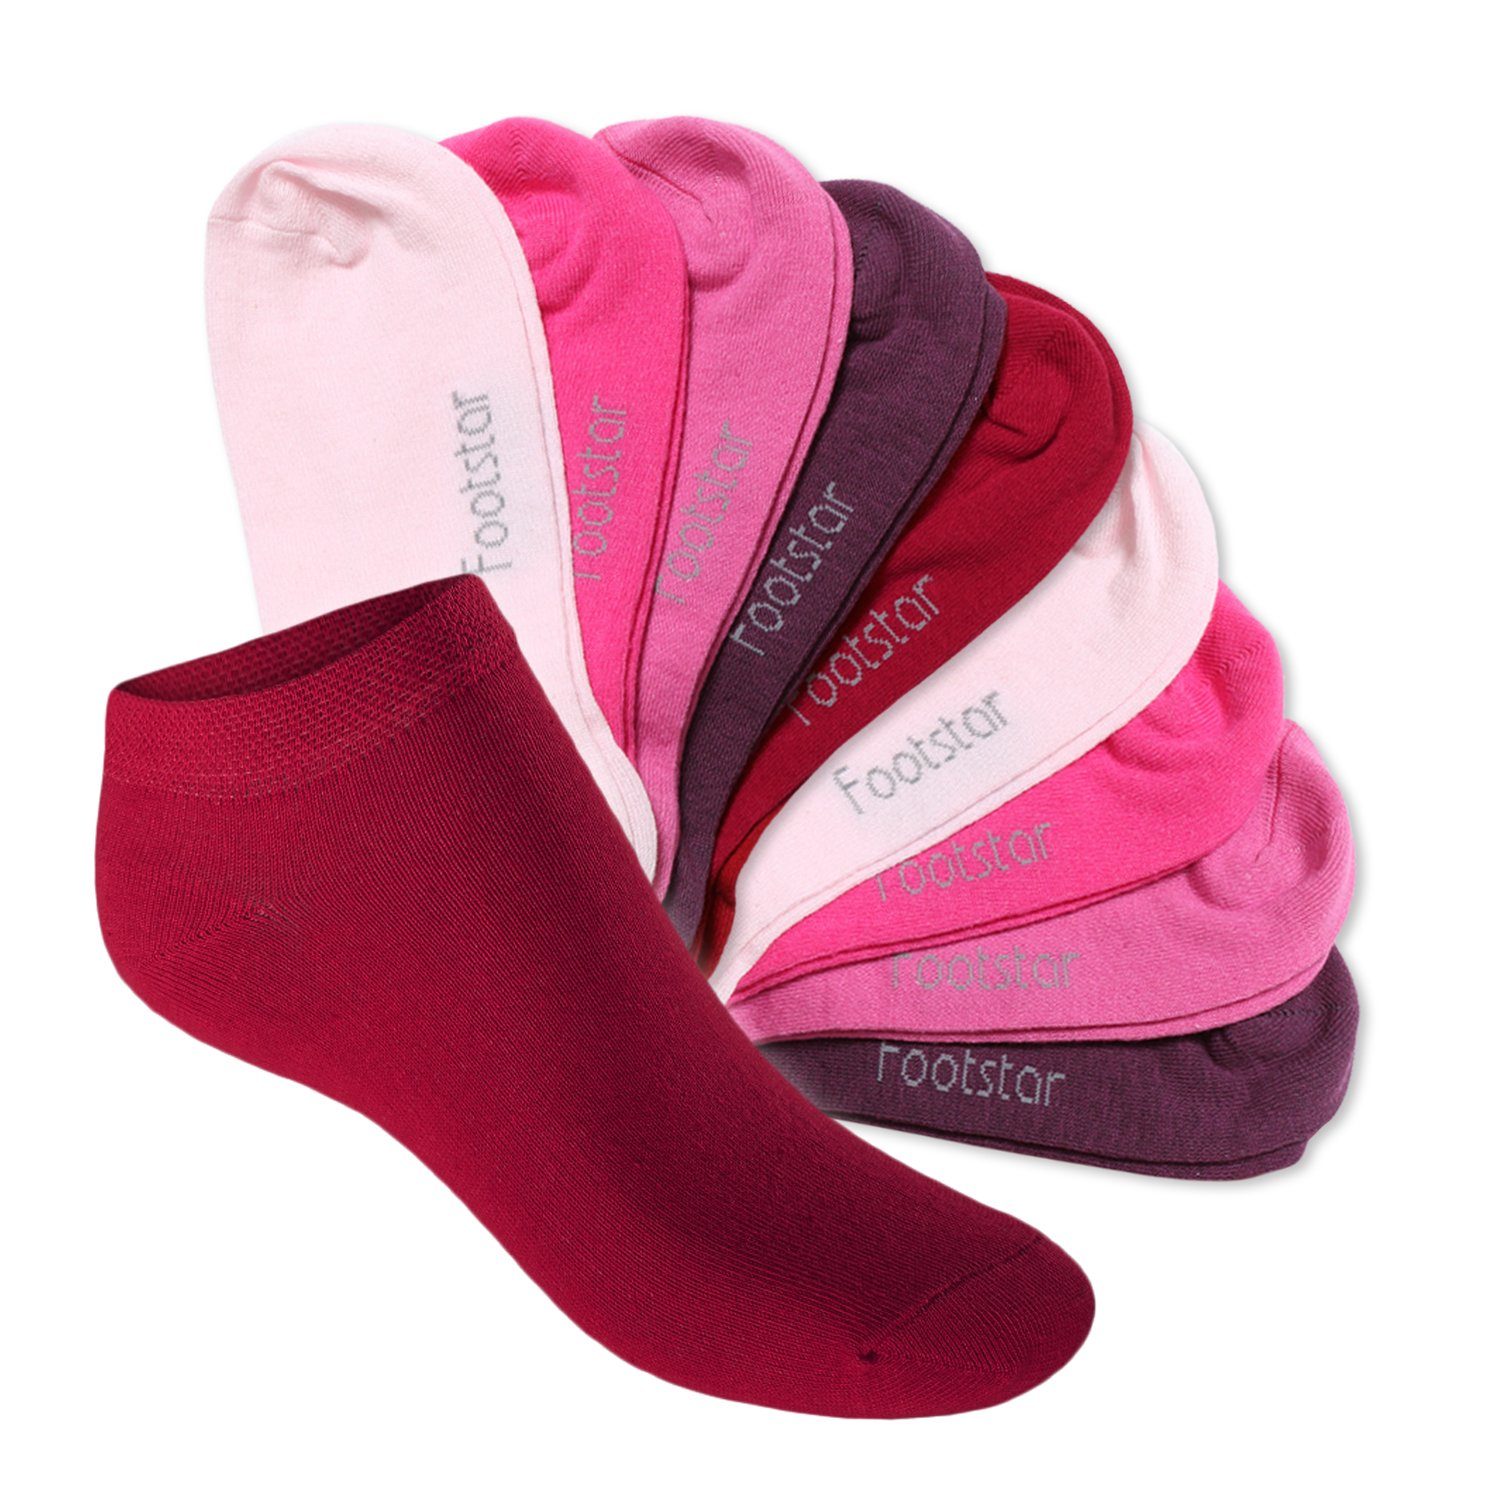 Berrytöne Socken (10 Paar) Socken für Kinder Kids Kurze Kurzsocken - Sneaker Footstar